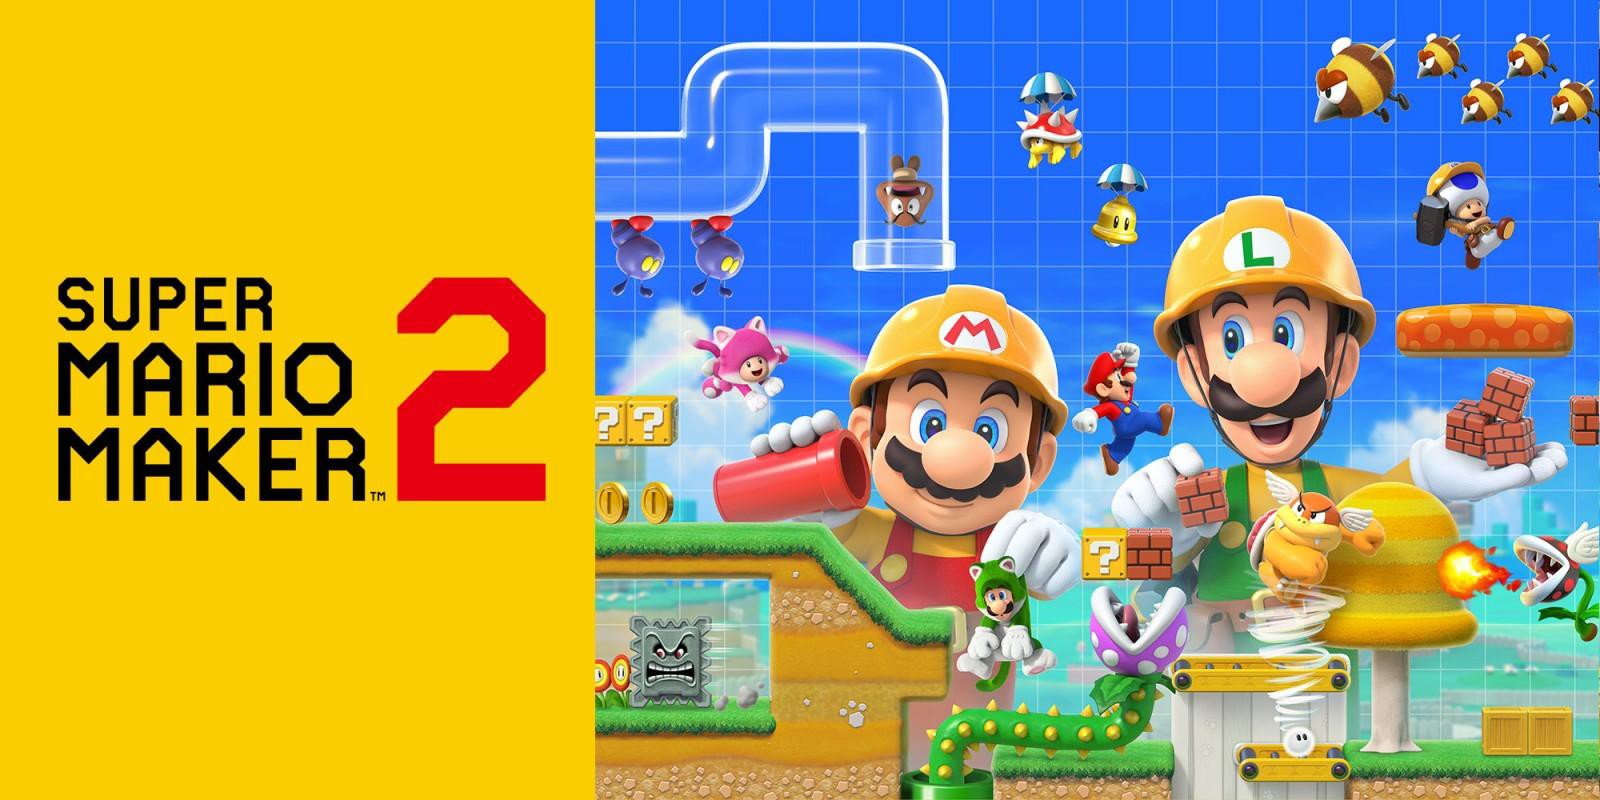 Trở Về Tuổi Thơ Với Super Mario Maker 2